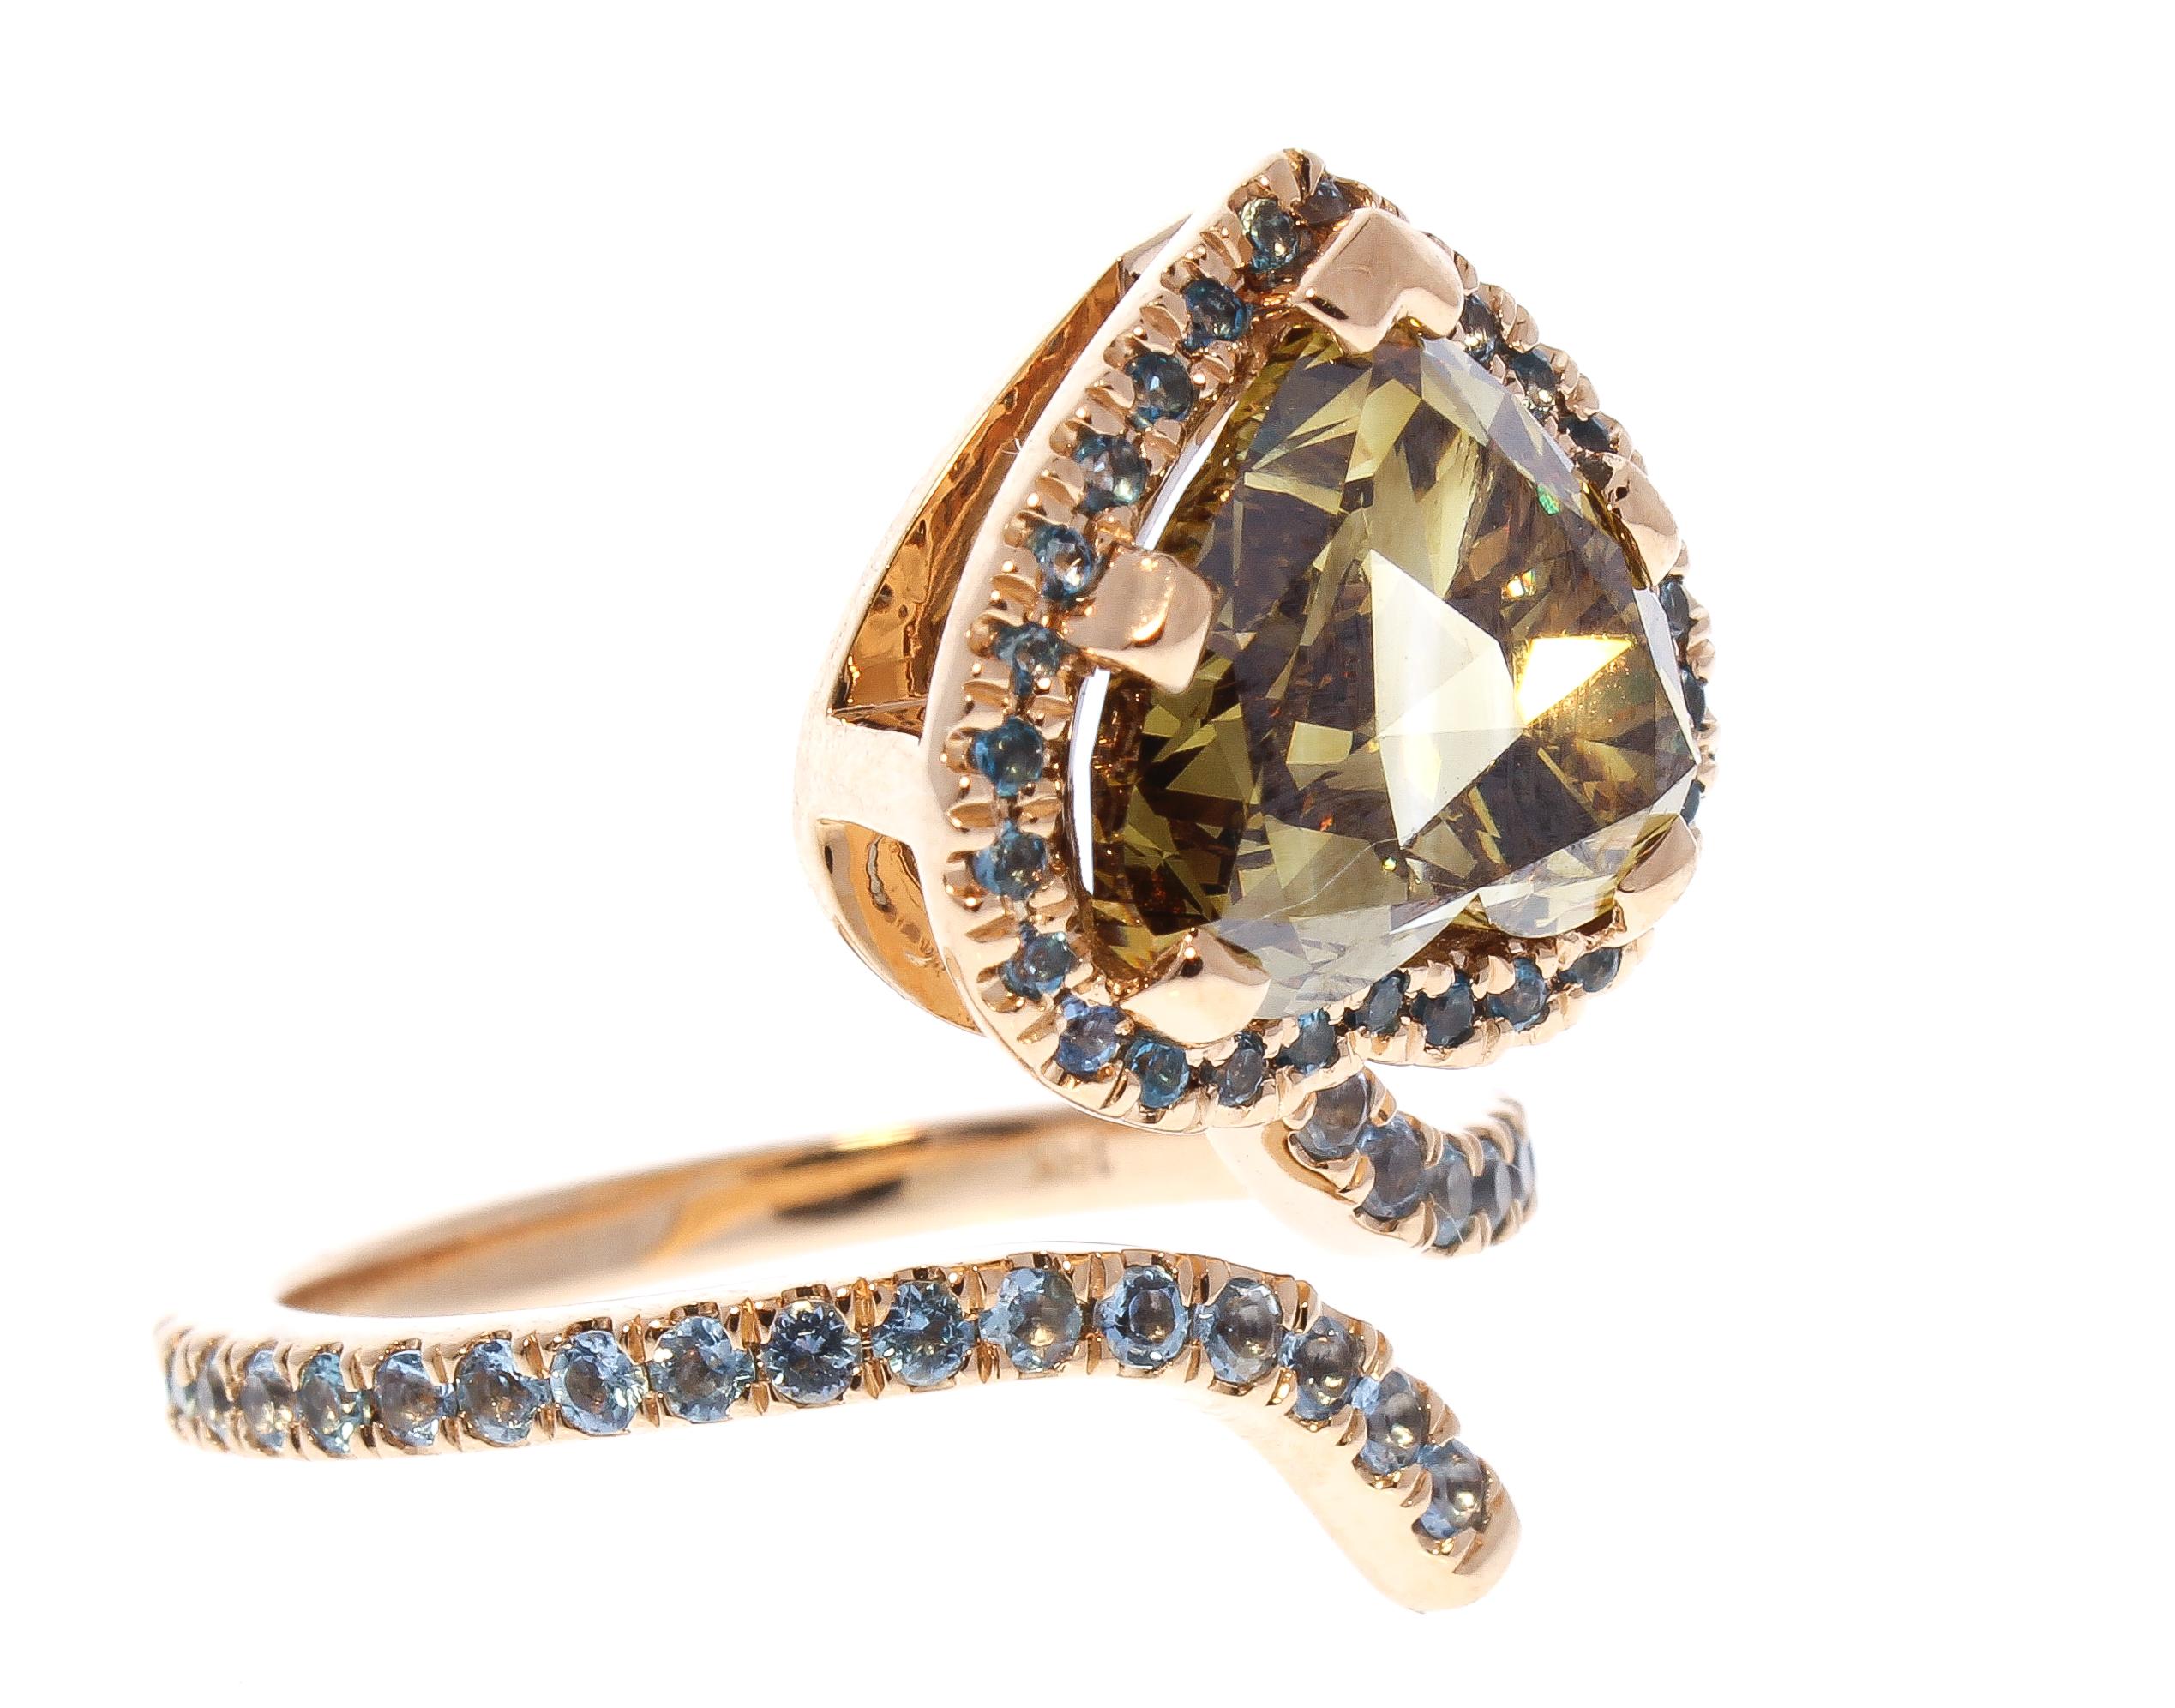 Contemporary GIA Certified 5.02 Carat Fancy Dark Brownish Yellow Heart Shaped Diamond Ring